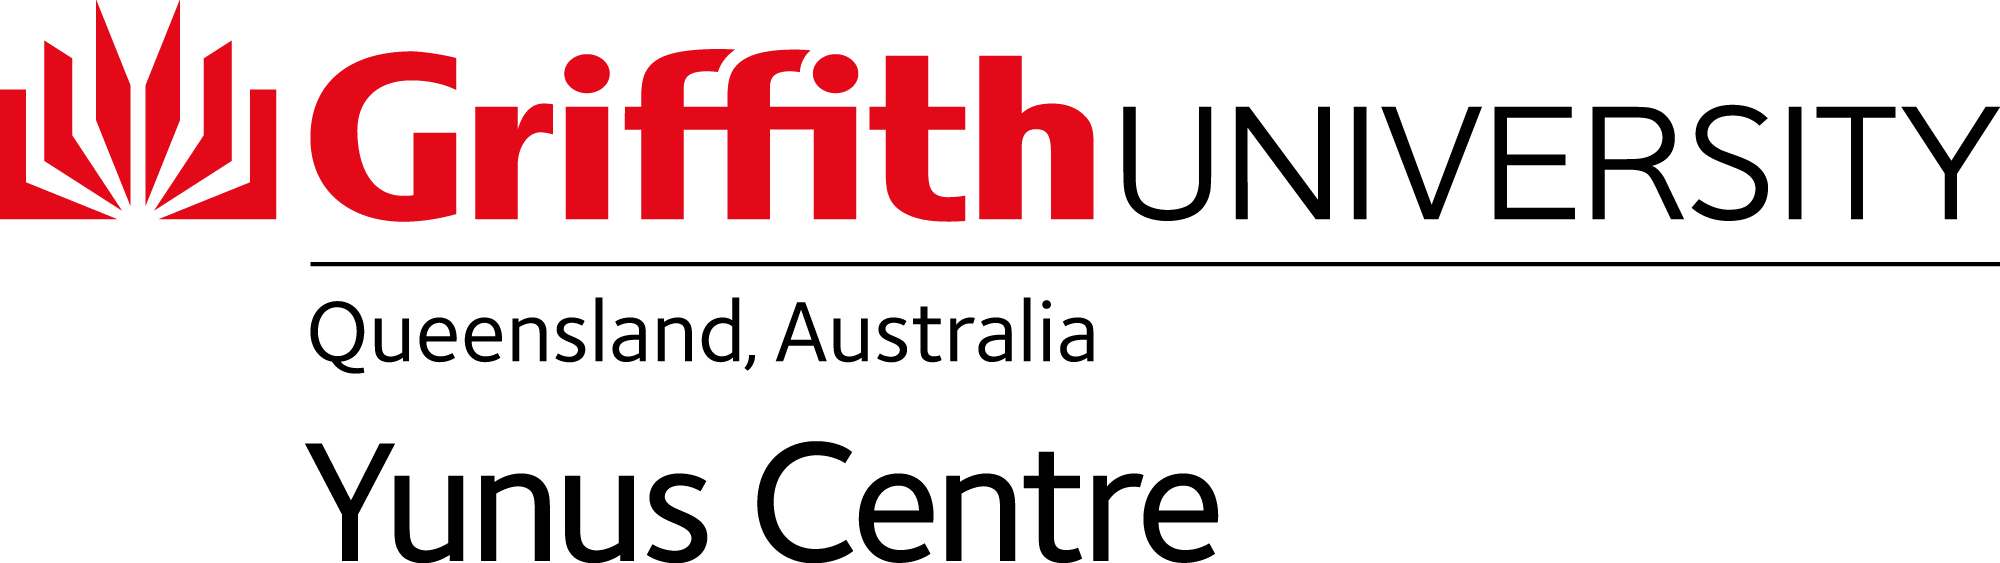 Griffith University Yunus Centre 